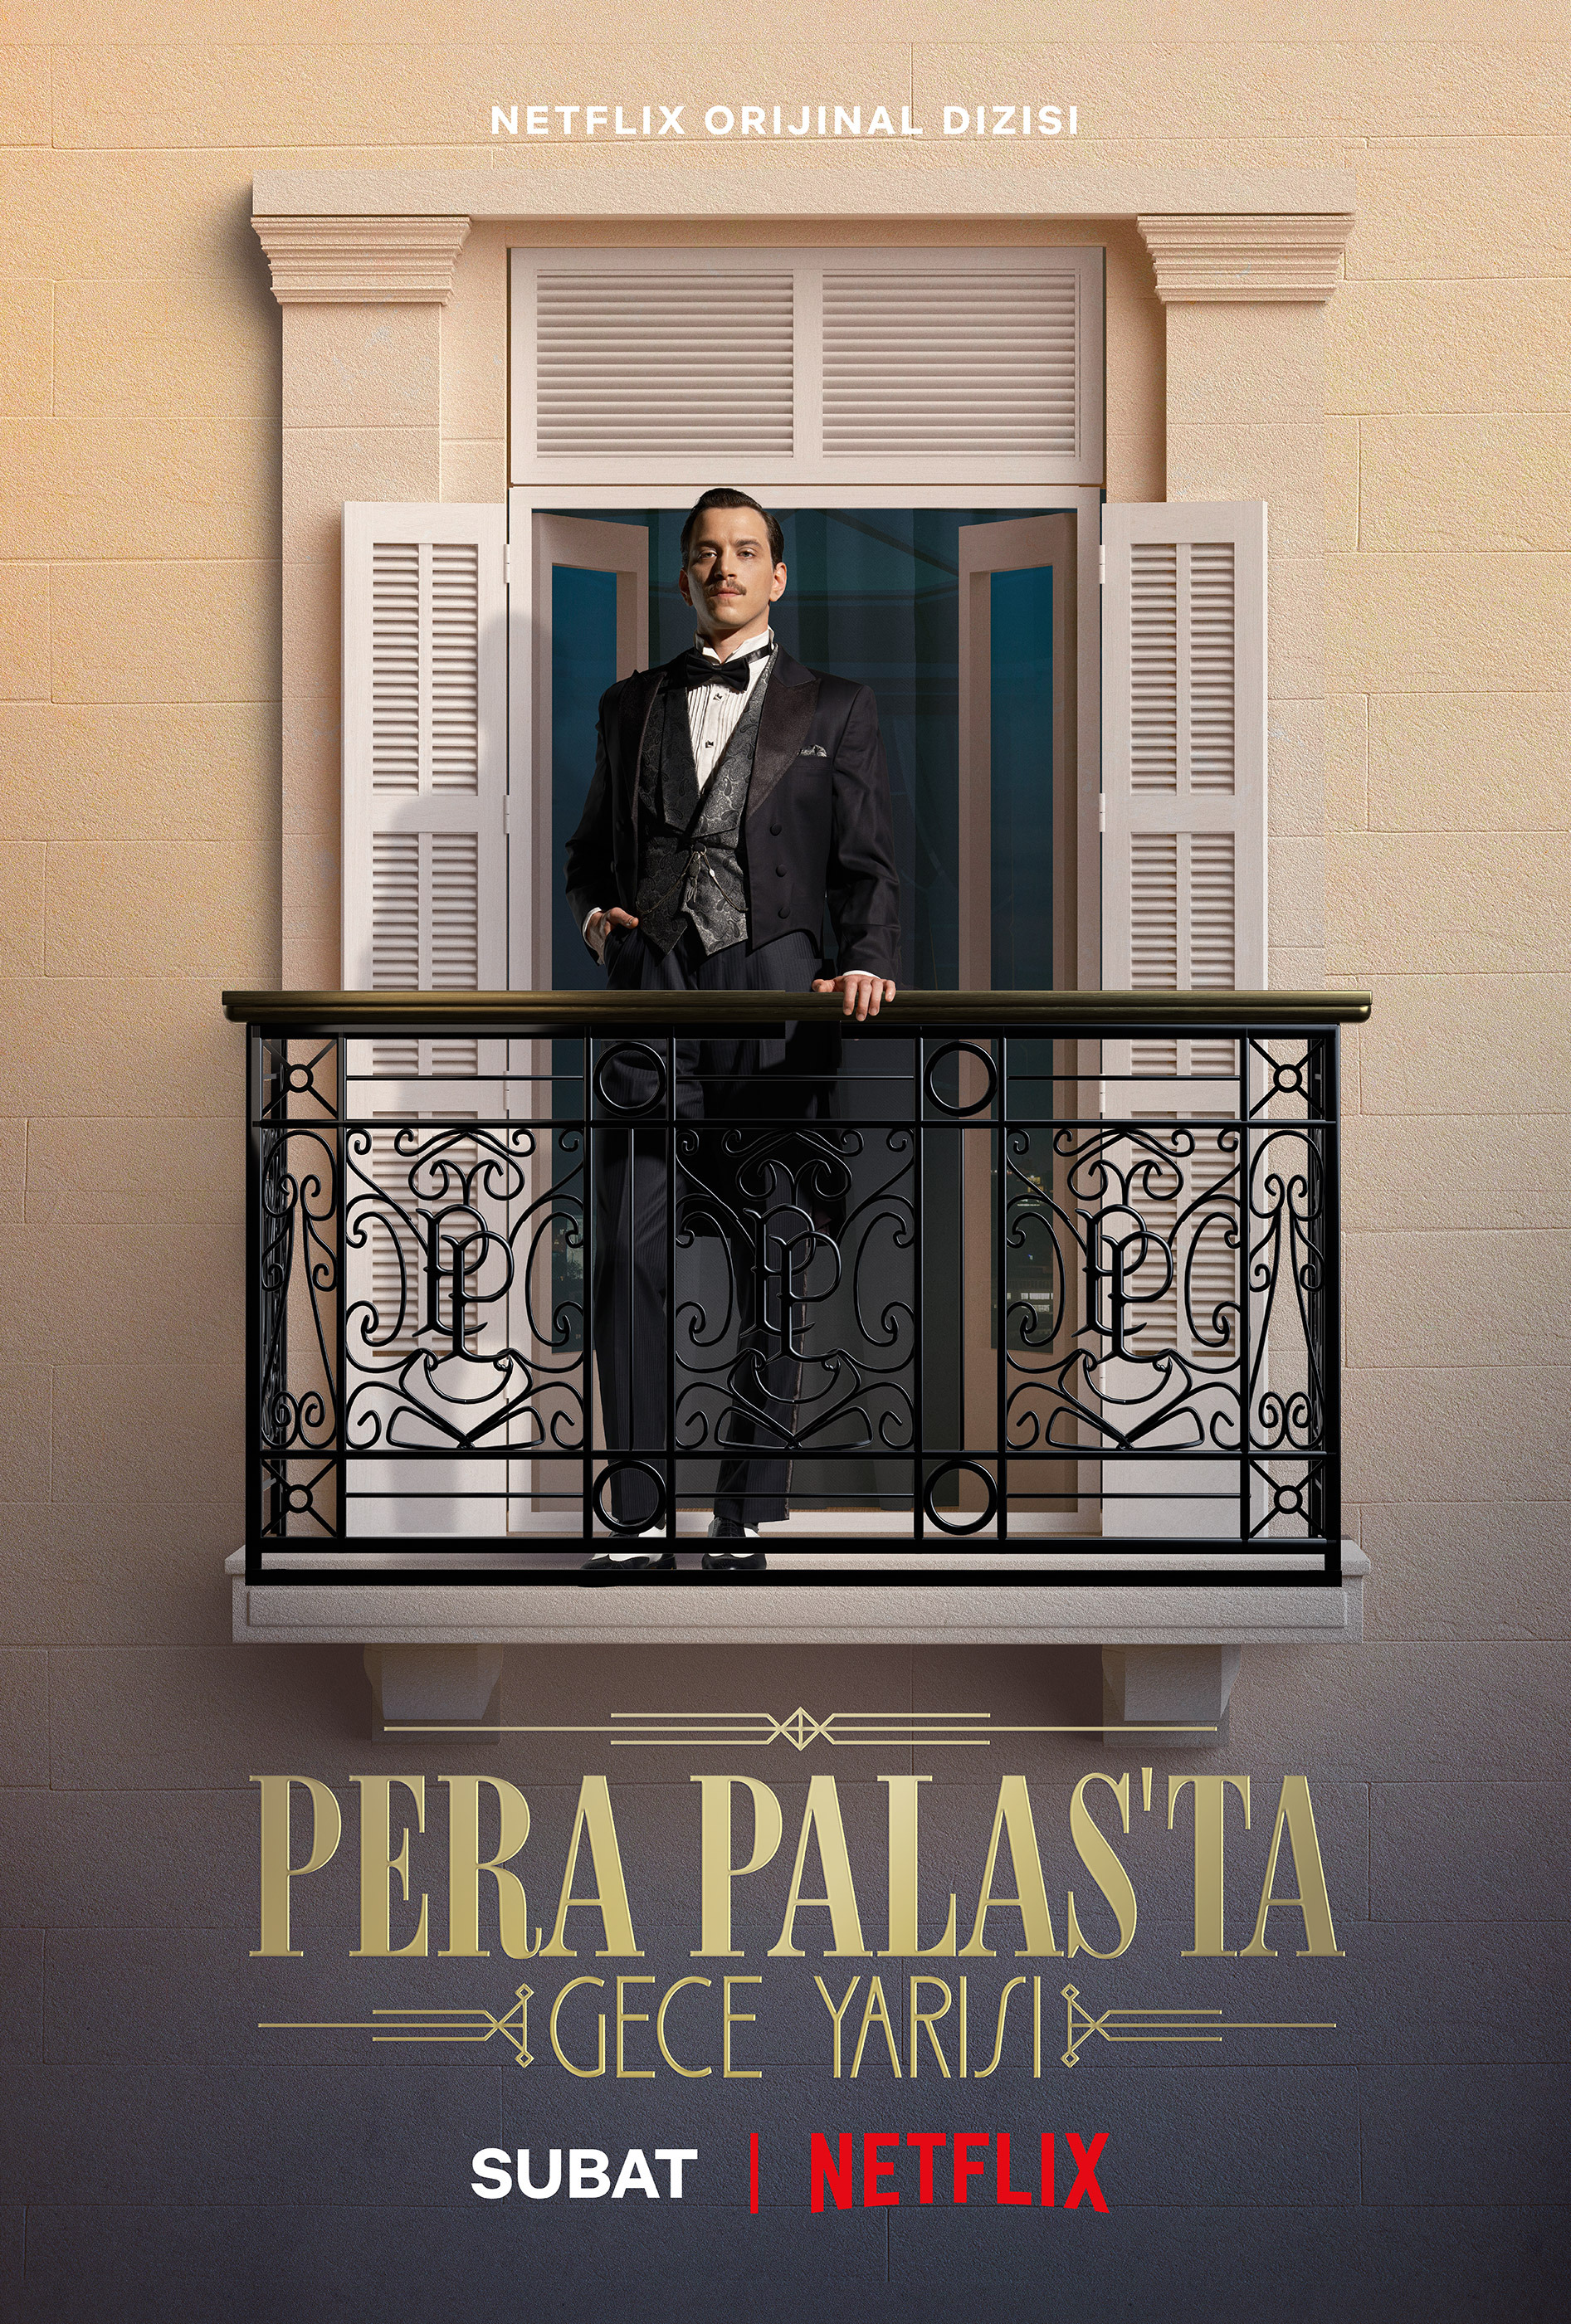 Mega Sized TV Poster Image for Pera Palas'ta Gece Yarisi (#7 of 10)